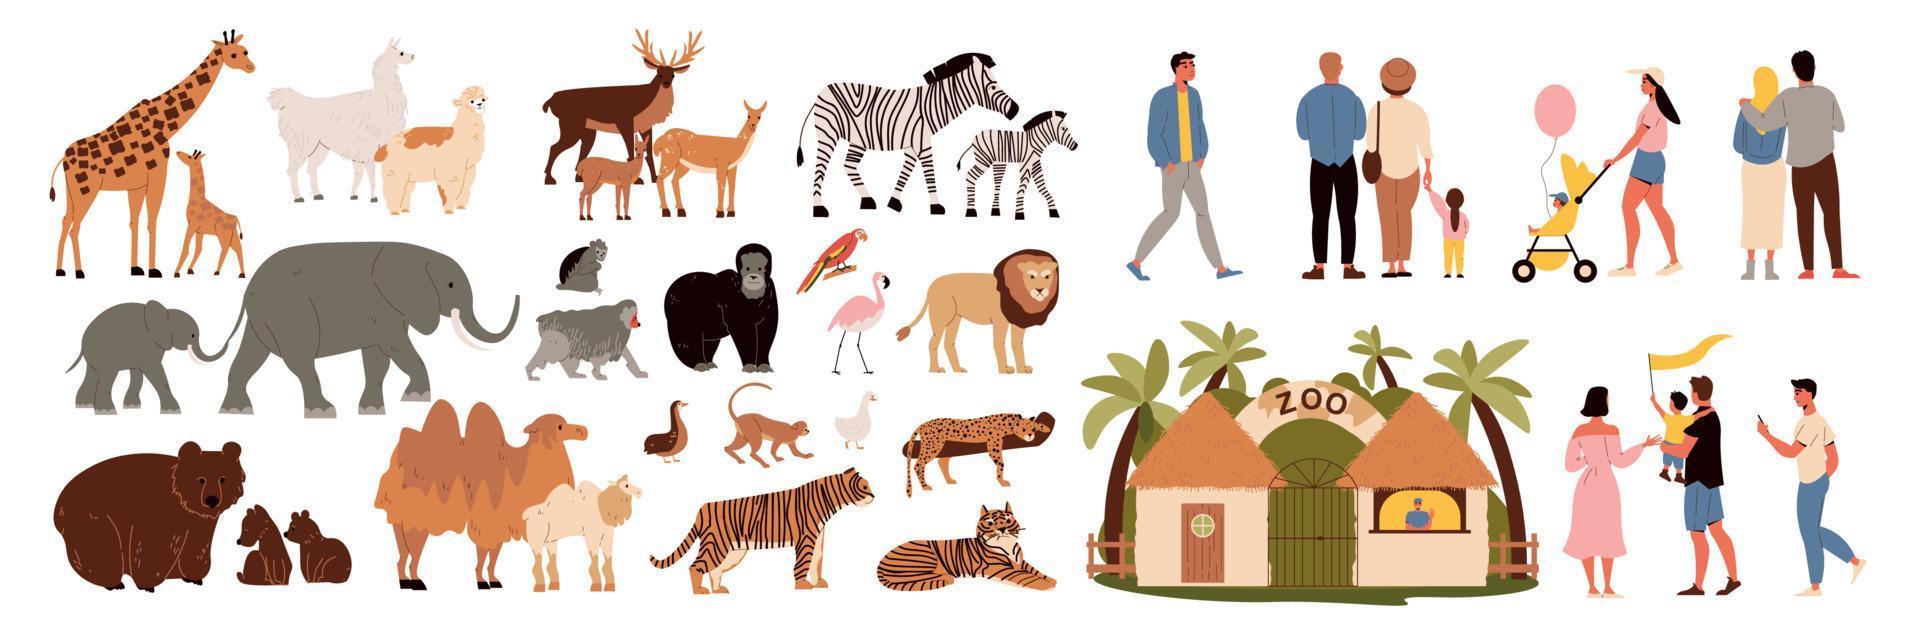 Zoo Icons Set vector